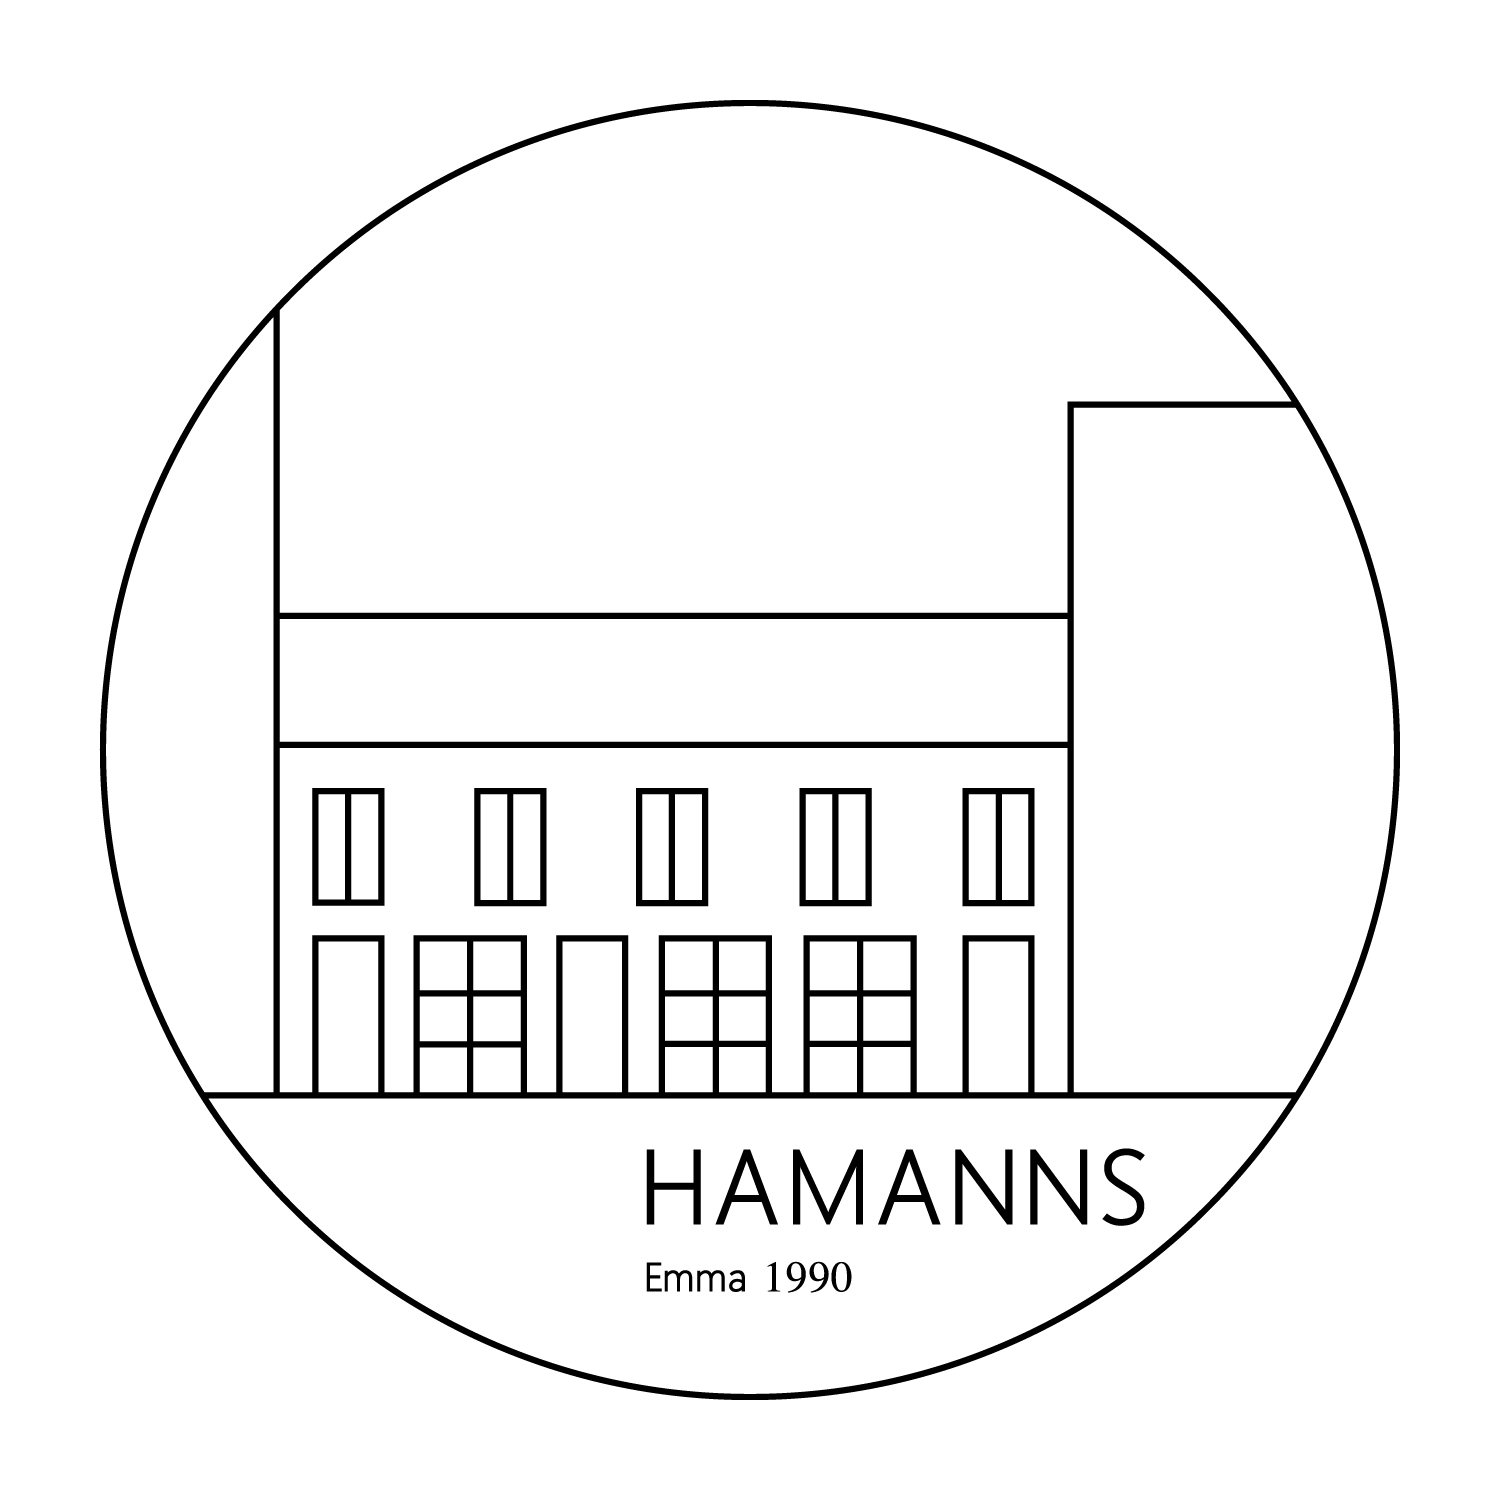 Hamanns, Emma 1990